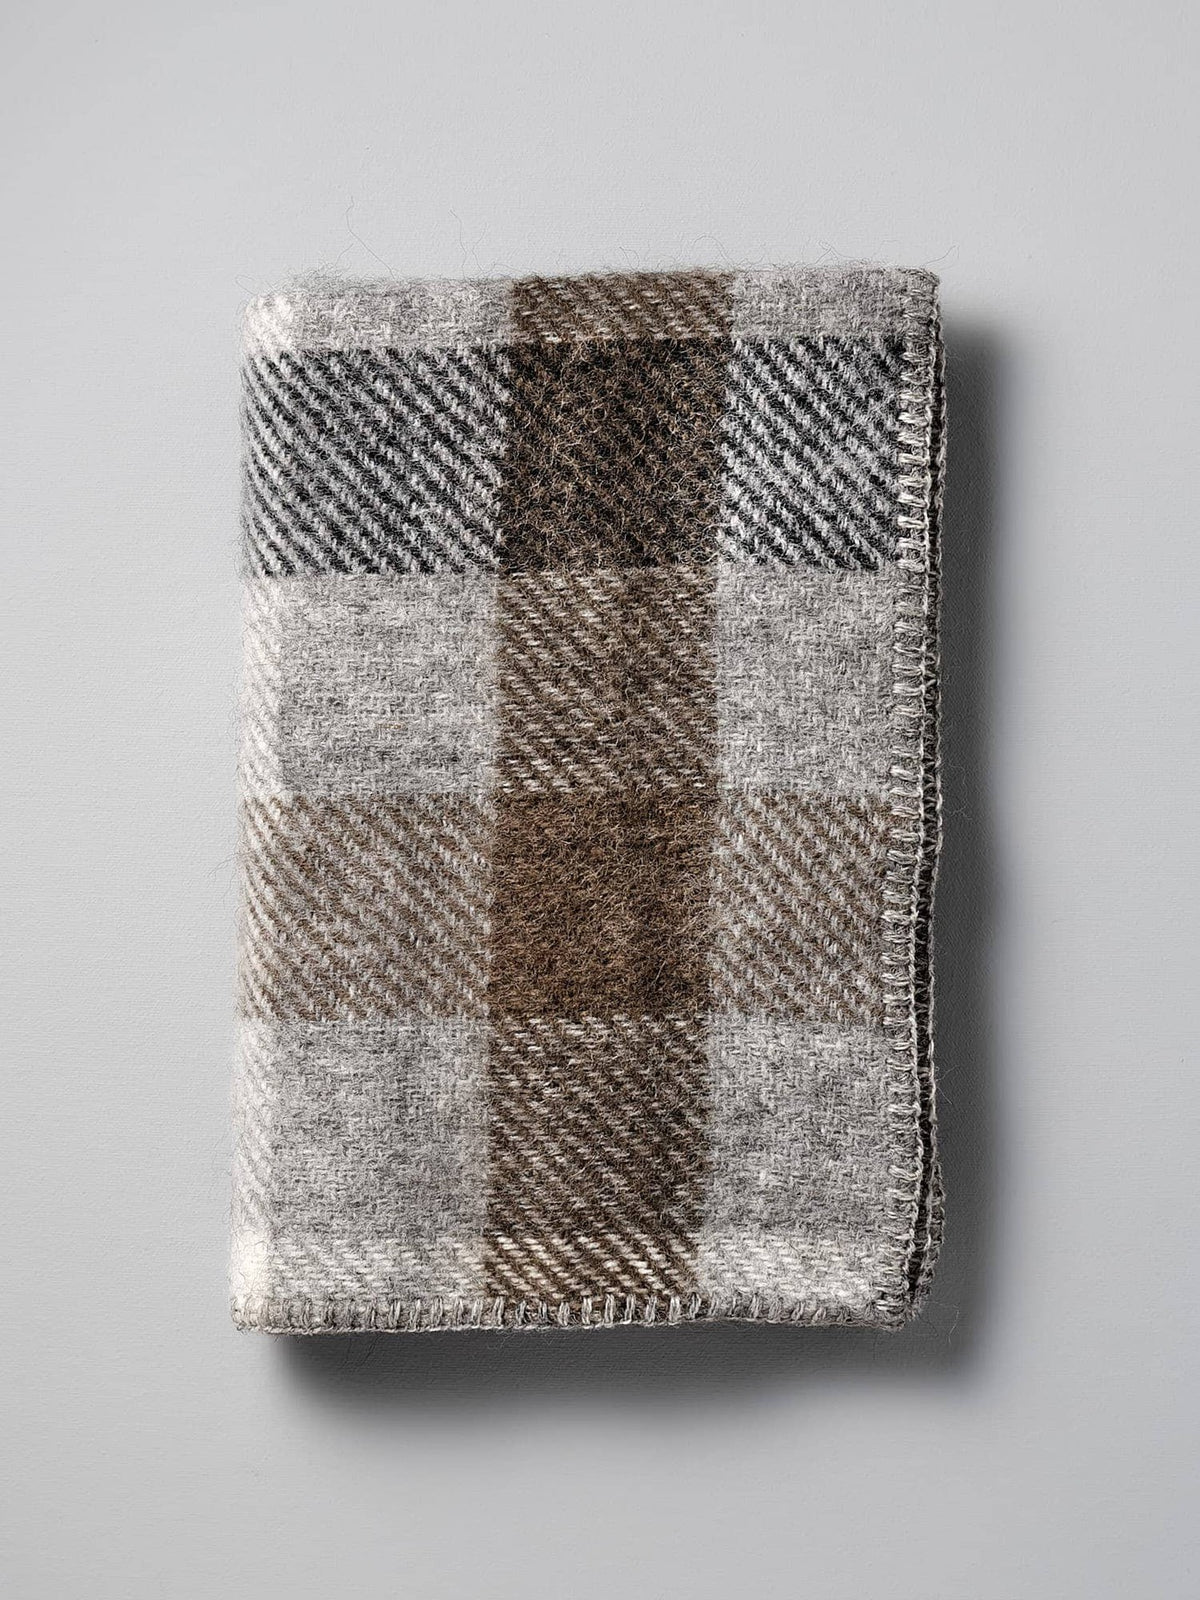 A Klippan Gotland Wool Baby Throw - Multi Grey blanket on a white surface.